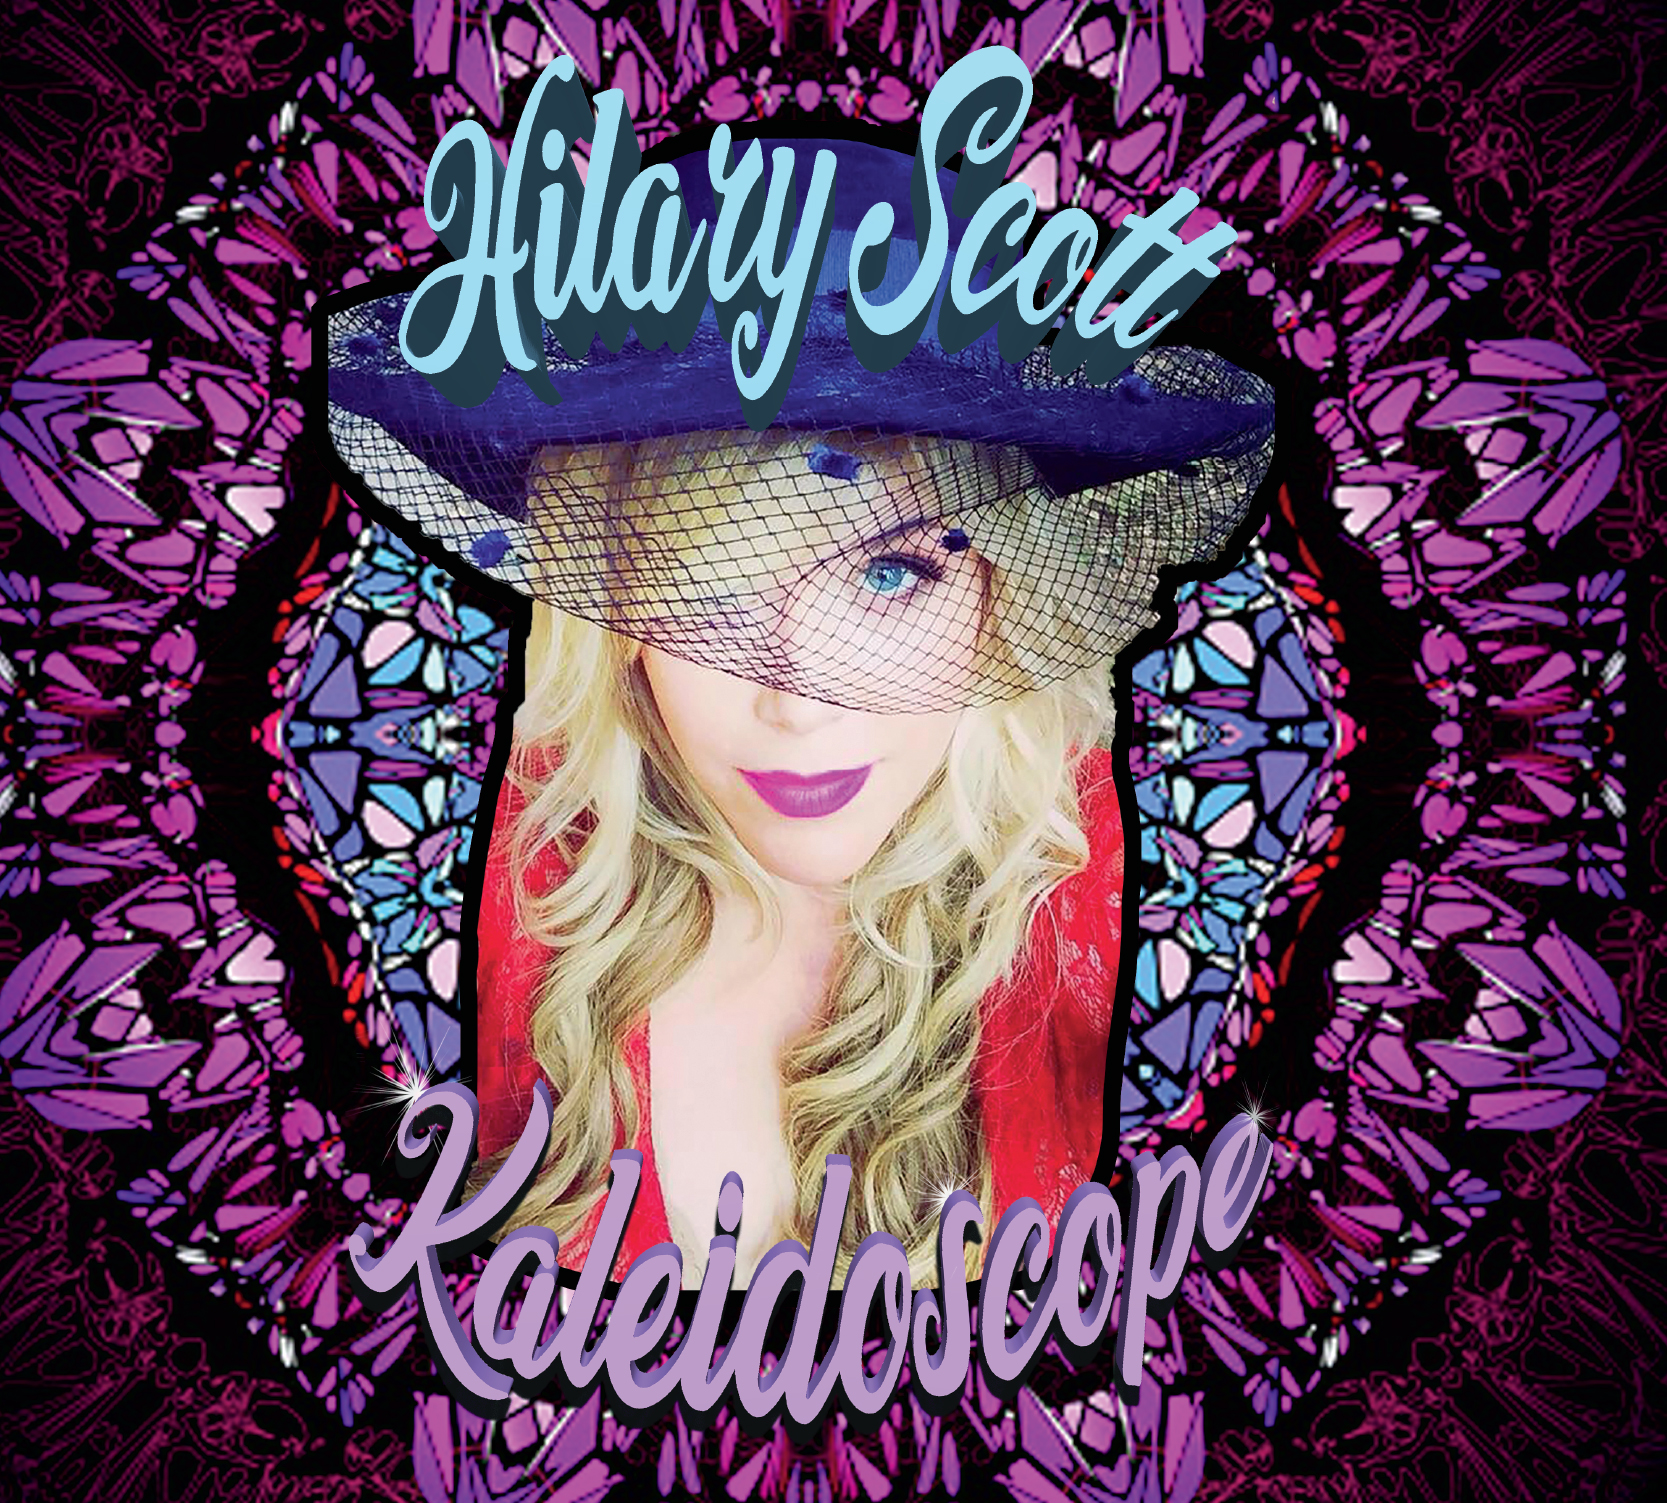 Hilary Scott Releases 'Kaleidoscope' Today